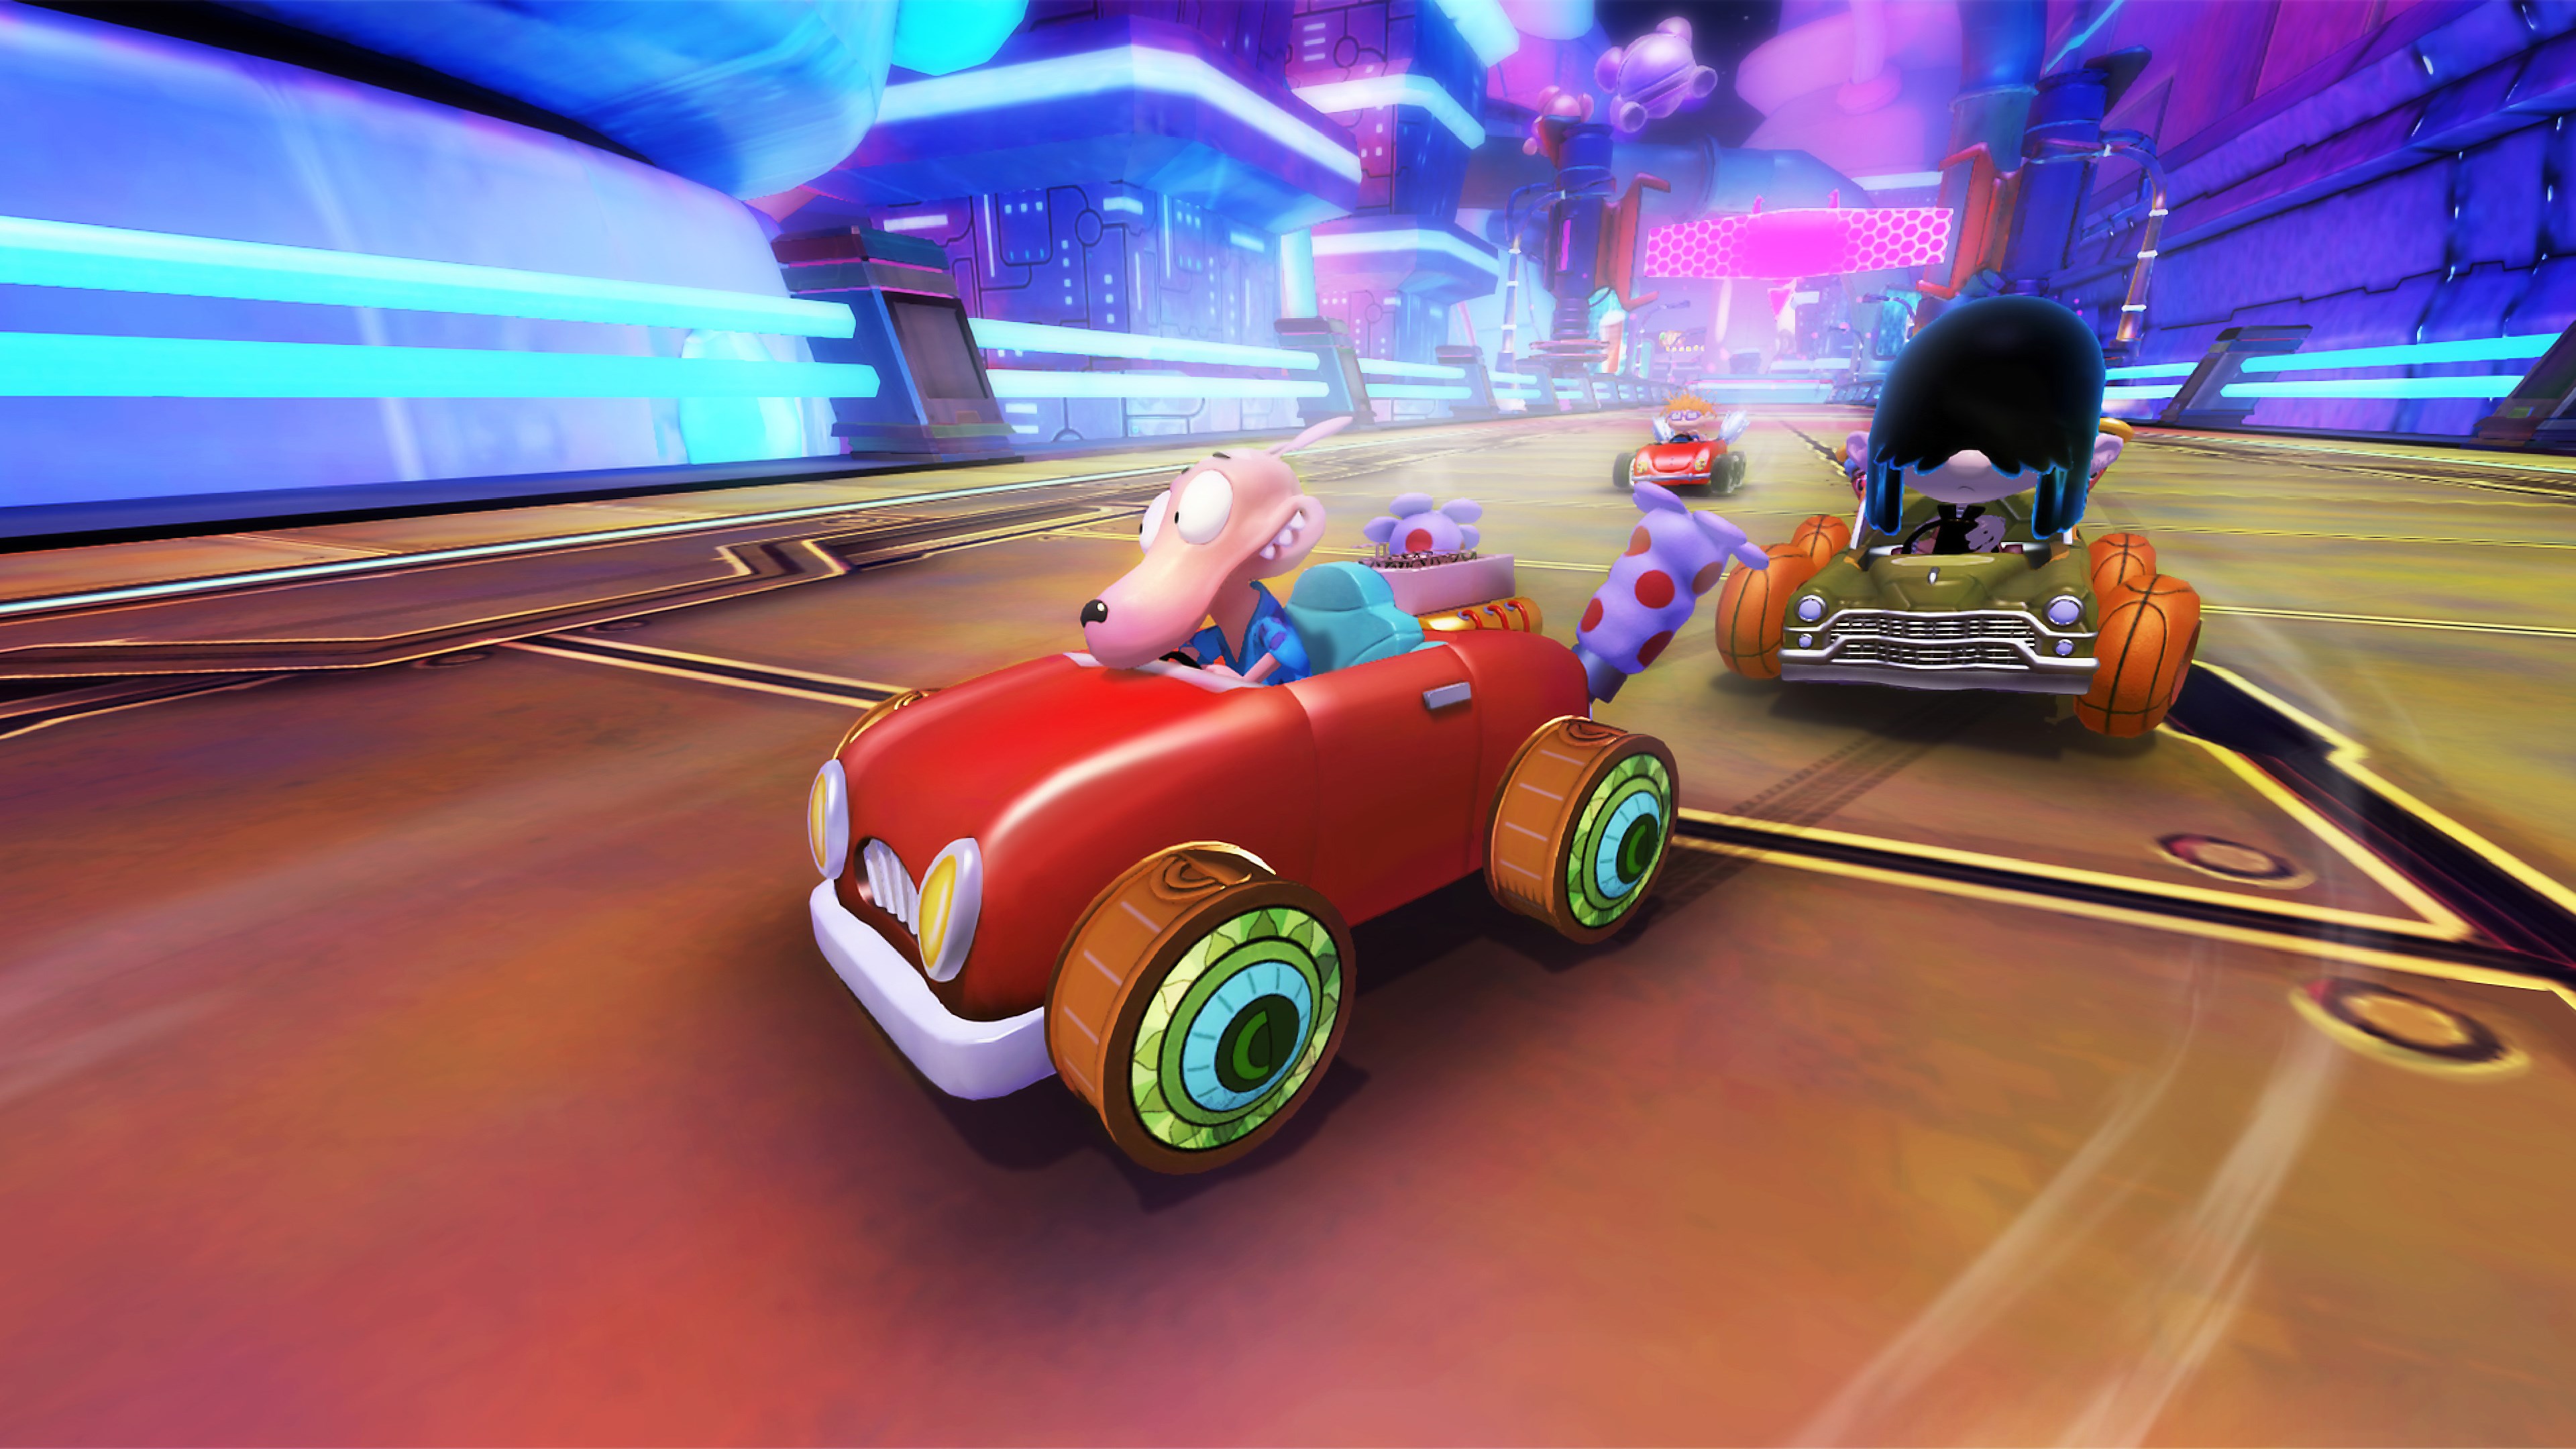 Nickelodeon Kart Racers 2: Grand Prix XBOX ONE / X|S 🔑